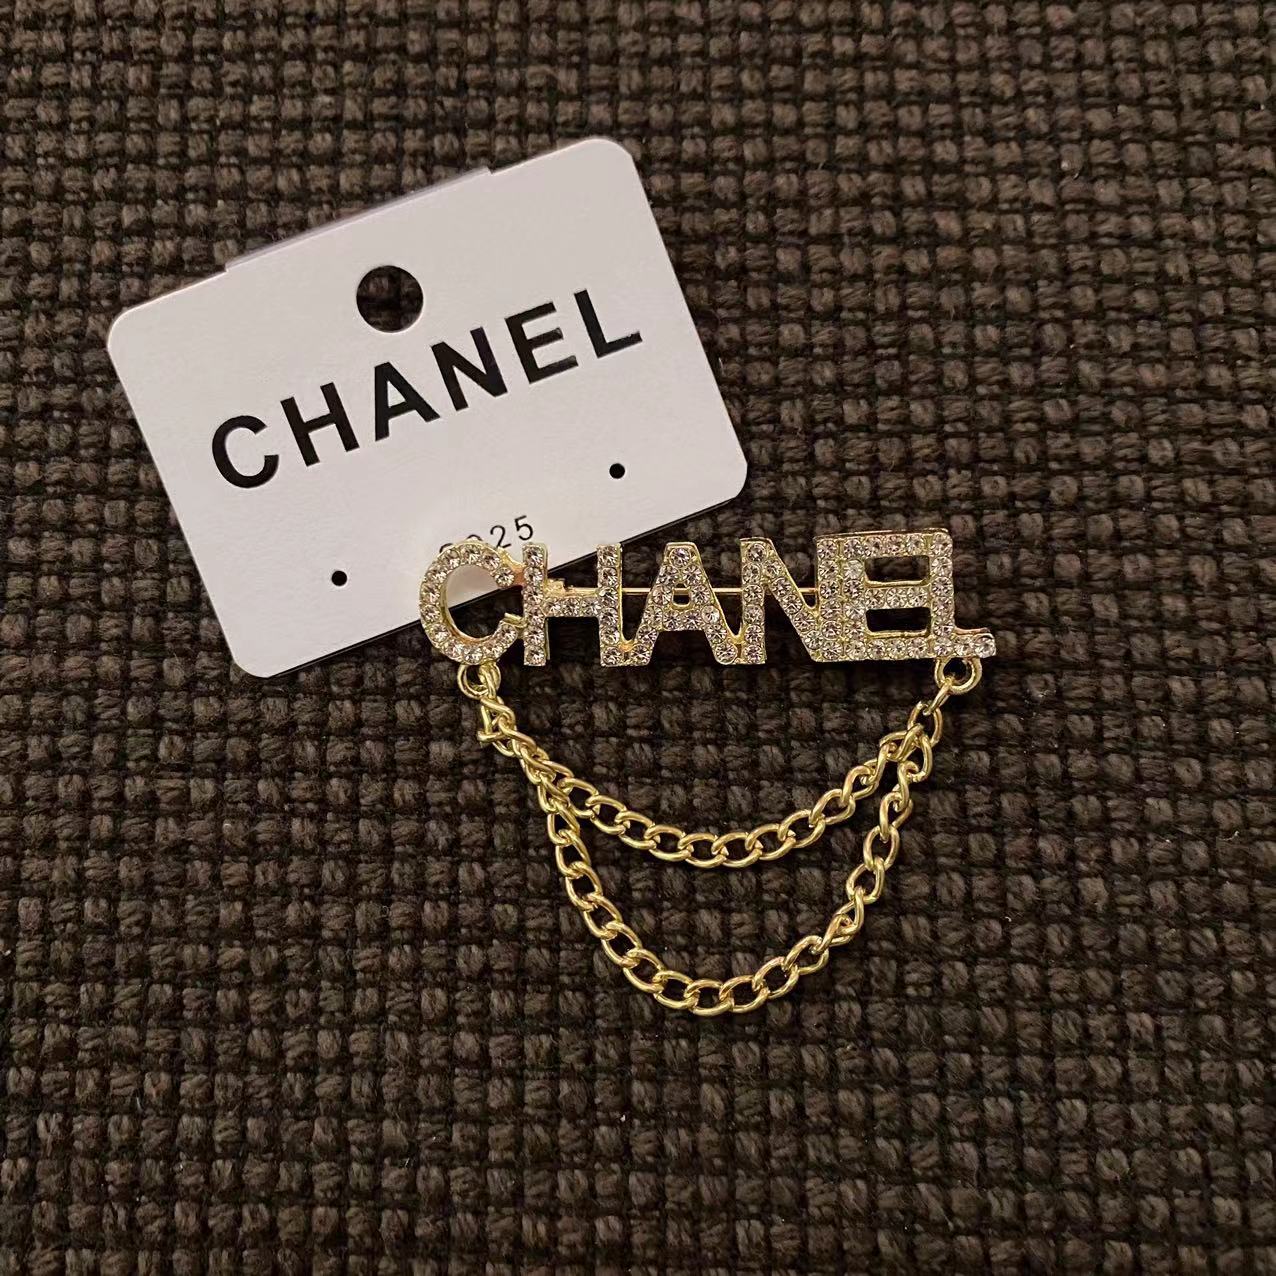 Big sale! Chanel brooch gold